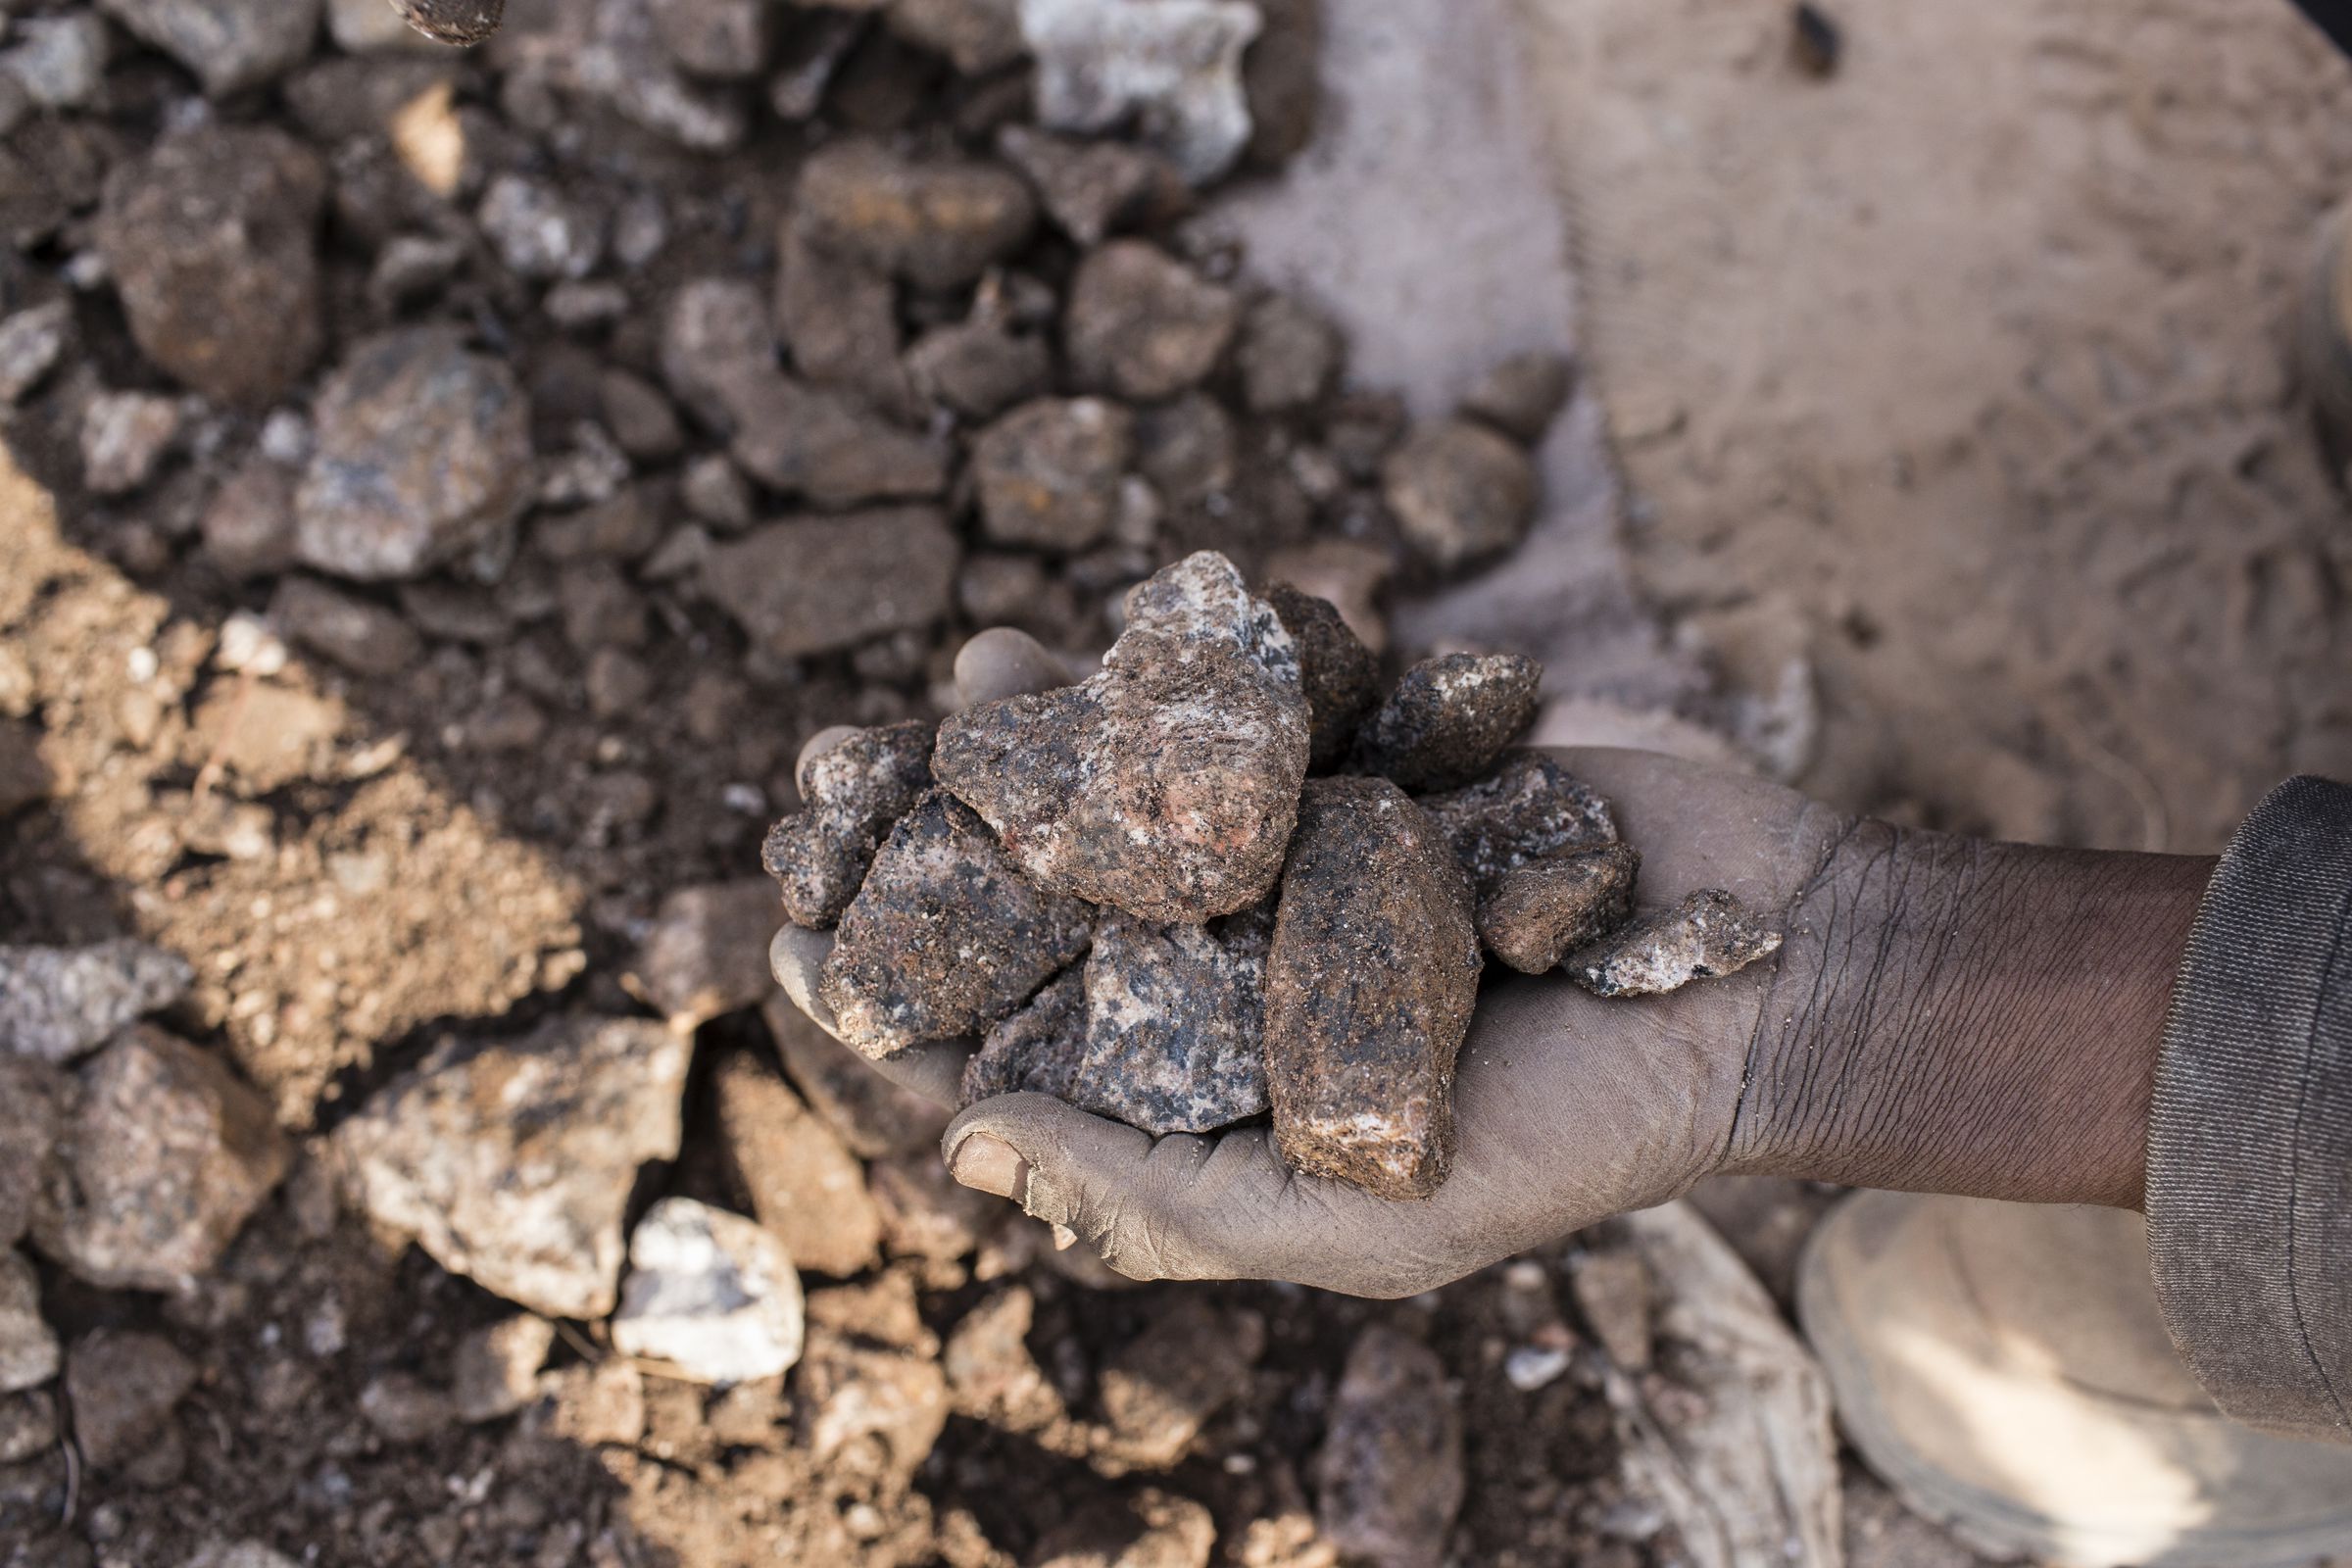 Cobalt Mining in Congo